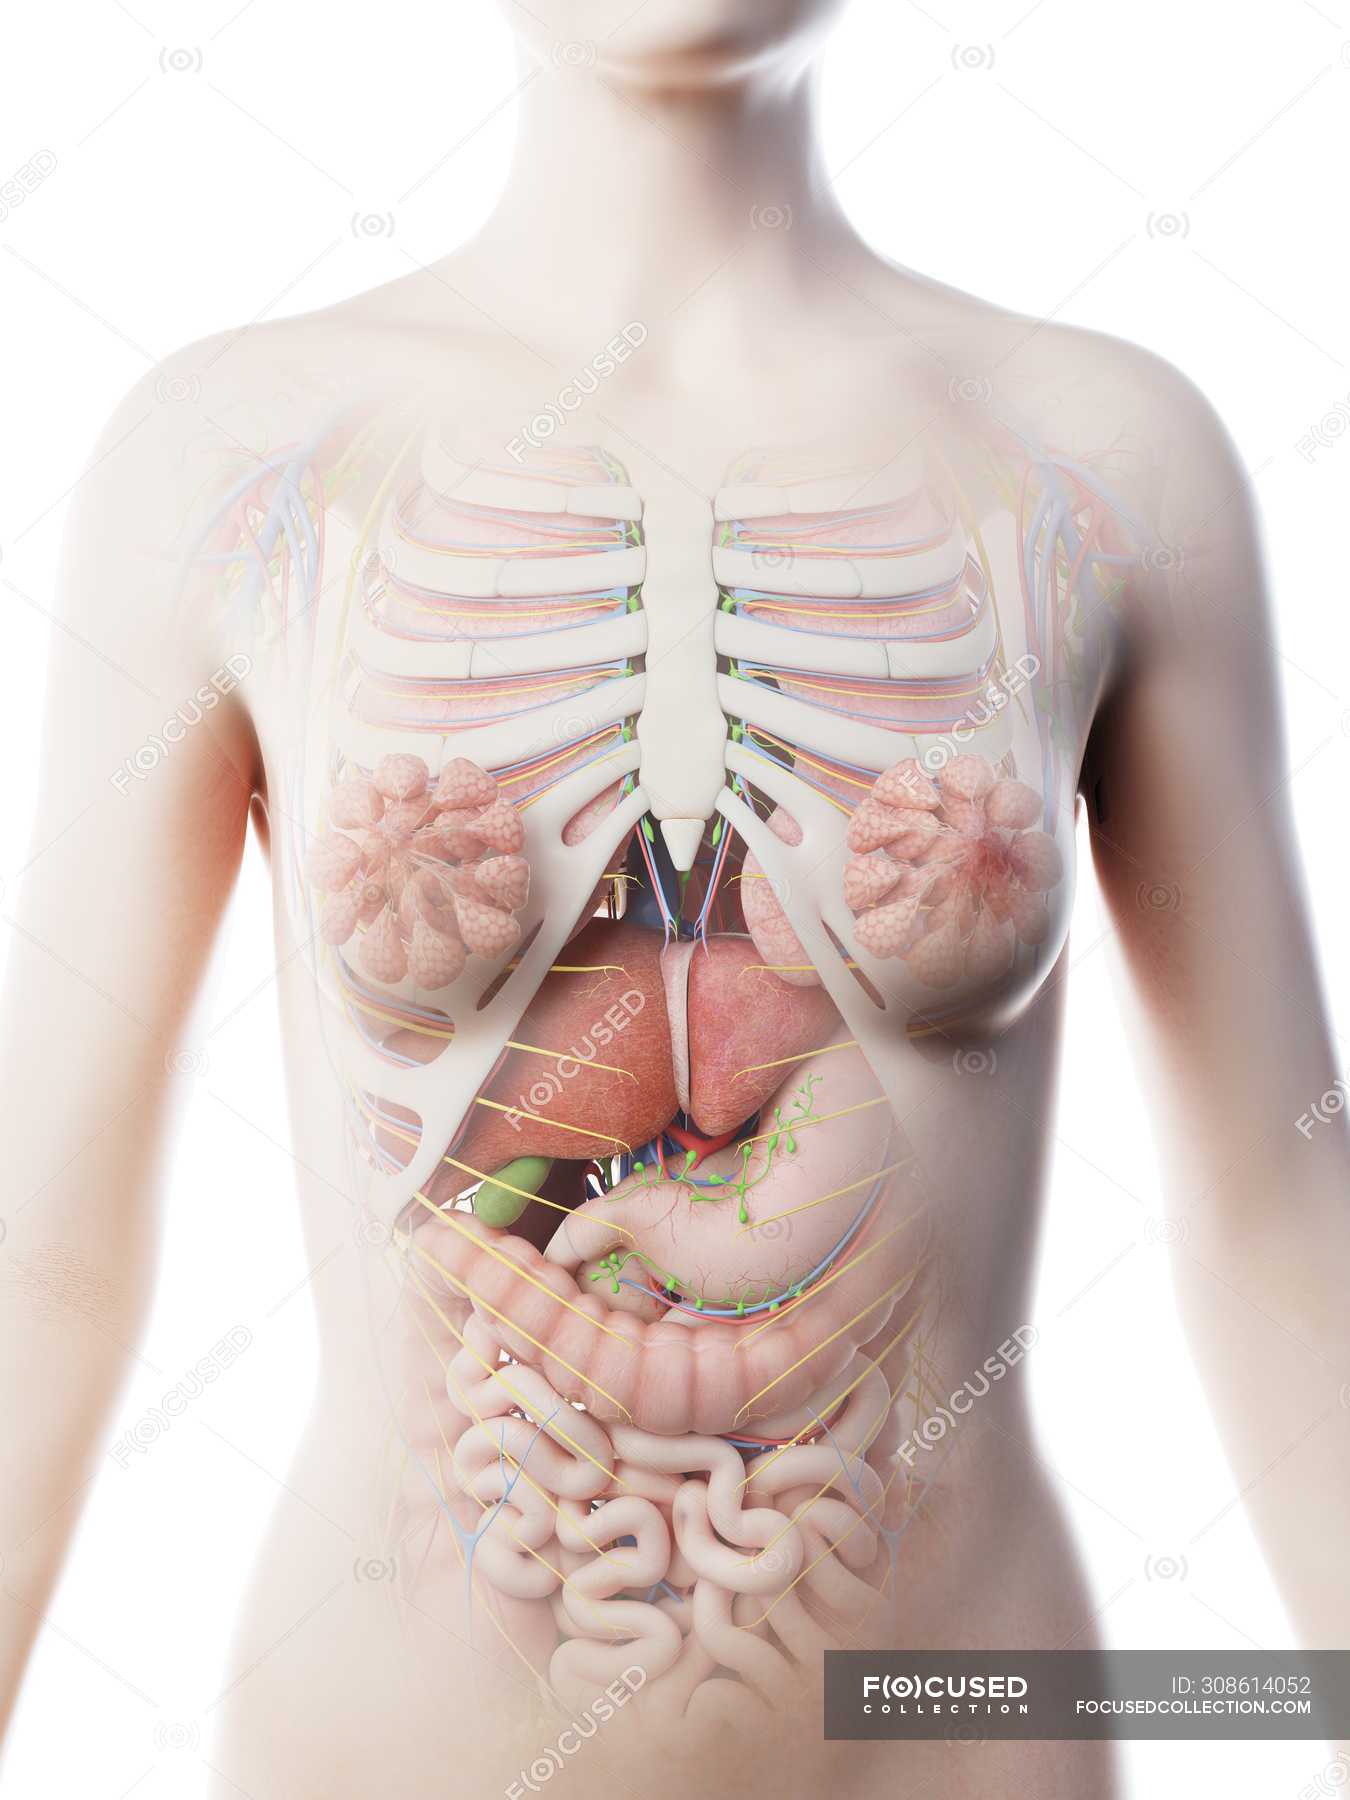 анатомия человека органы женщины фото